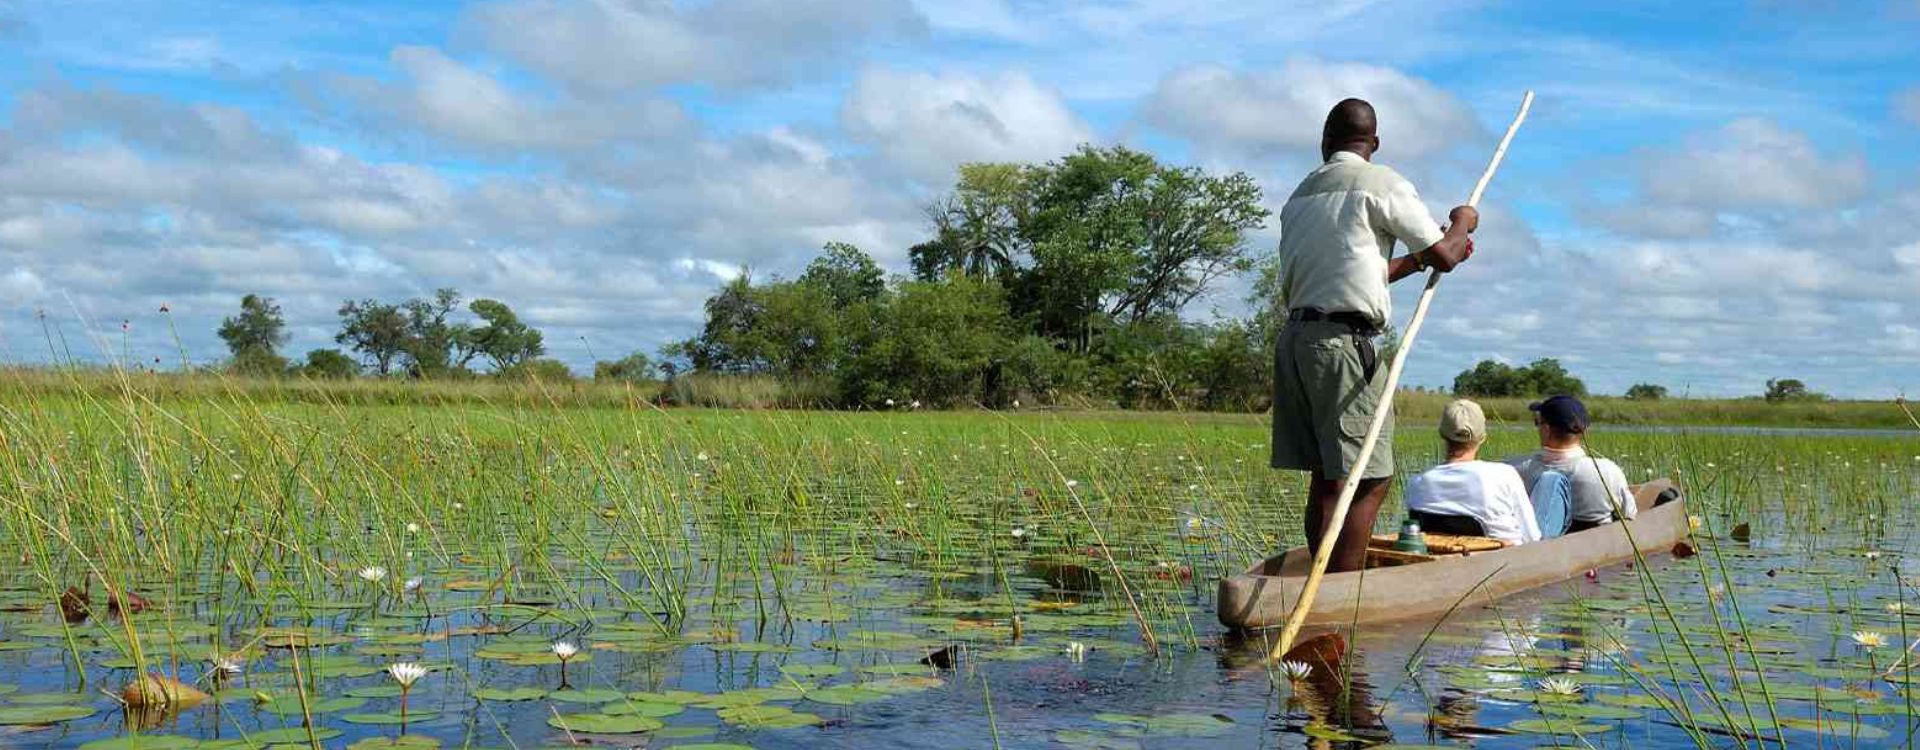 Things To Do In Okavango Delta